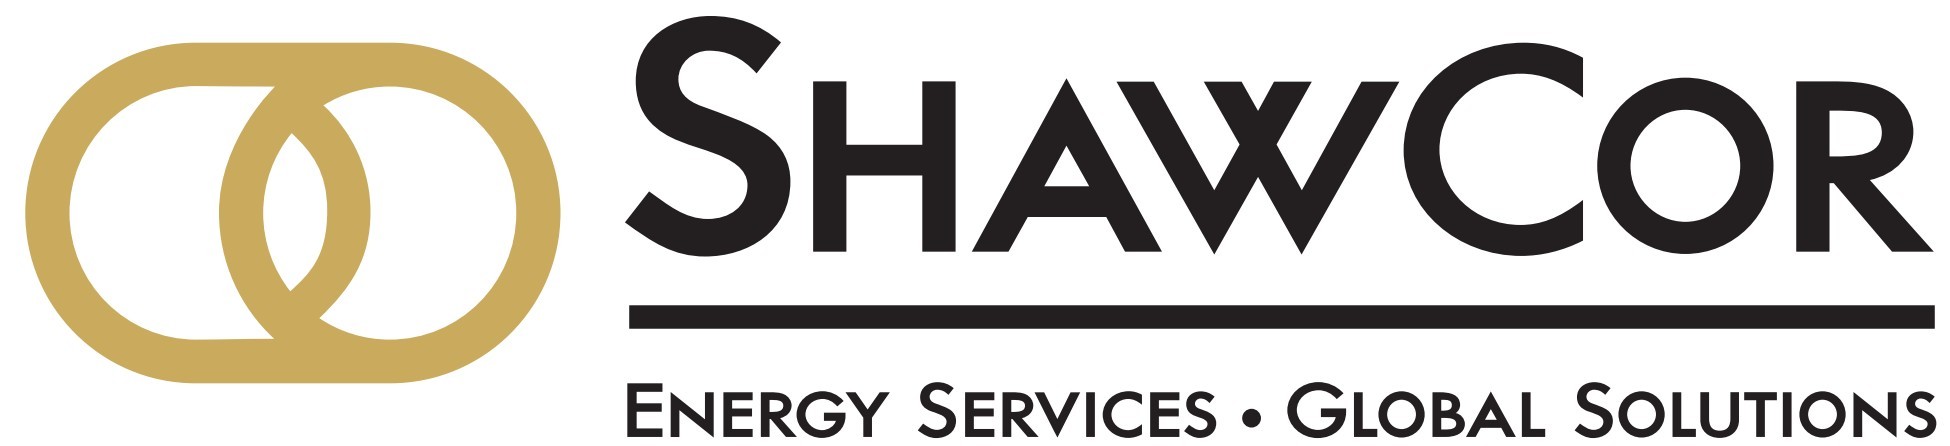 shawcor logo